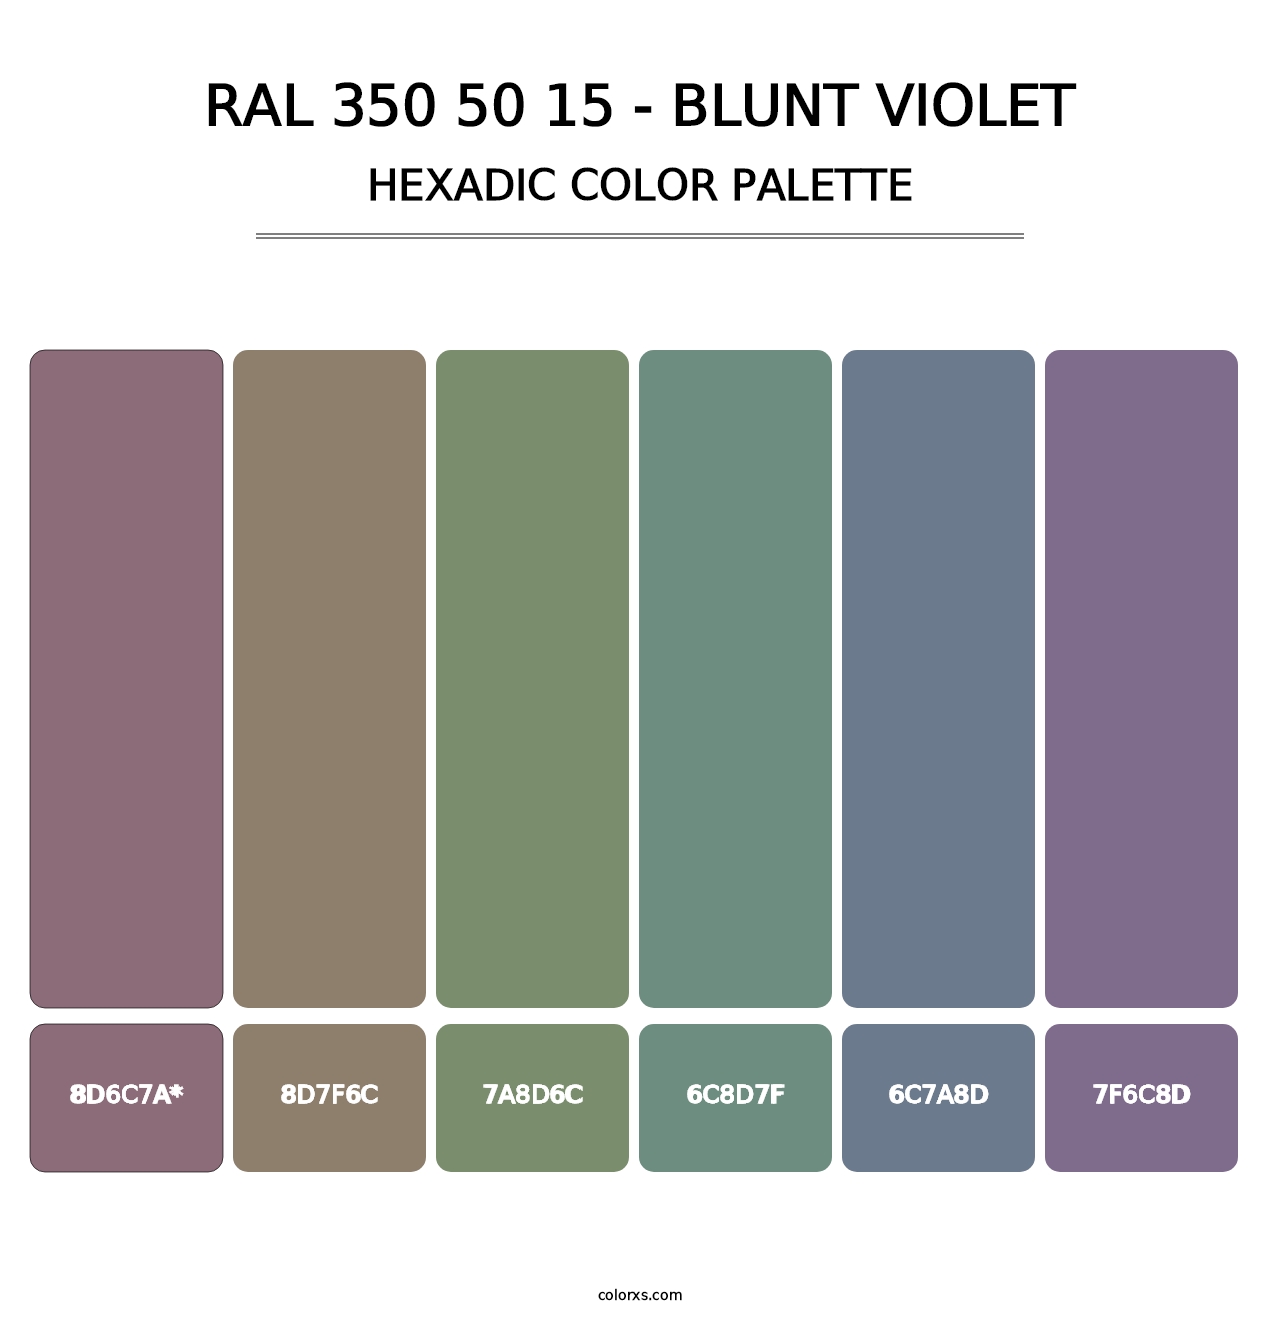 RAL 350 50 15 - Blunt Violet - Hexadic Color Palette